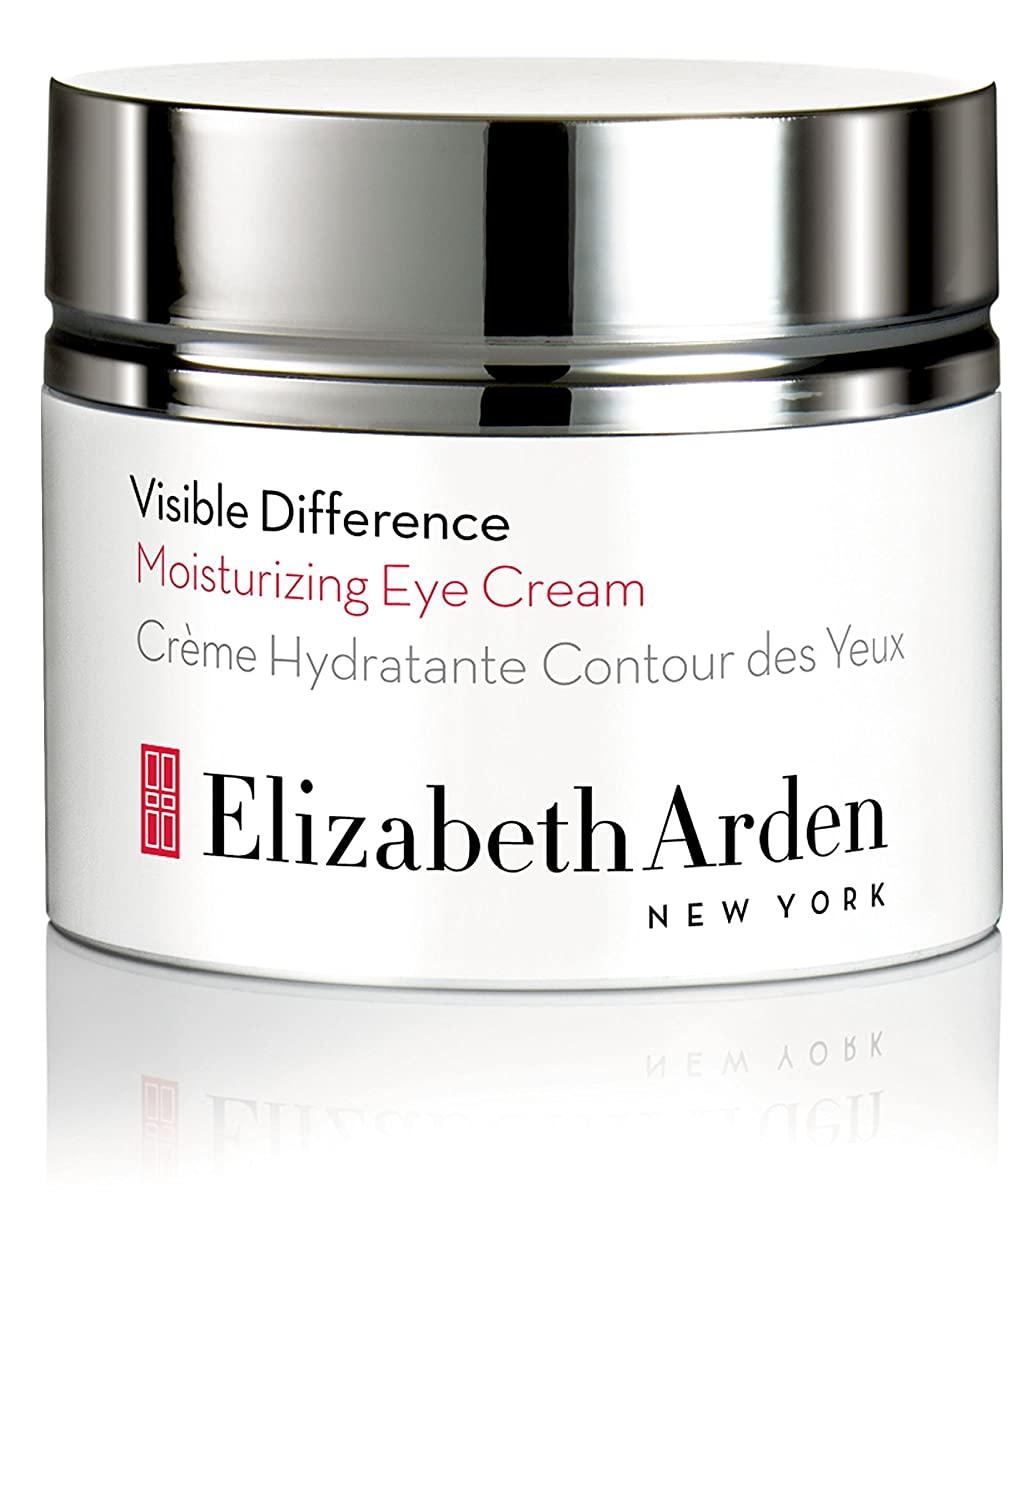 Visible Difference Moisturizing Eye Cream